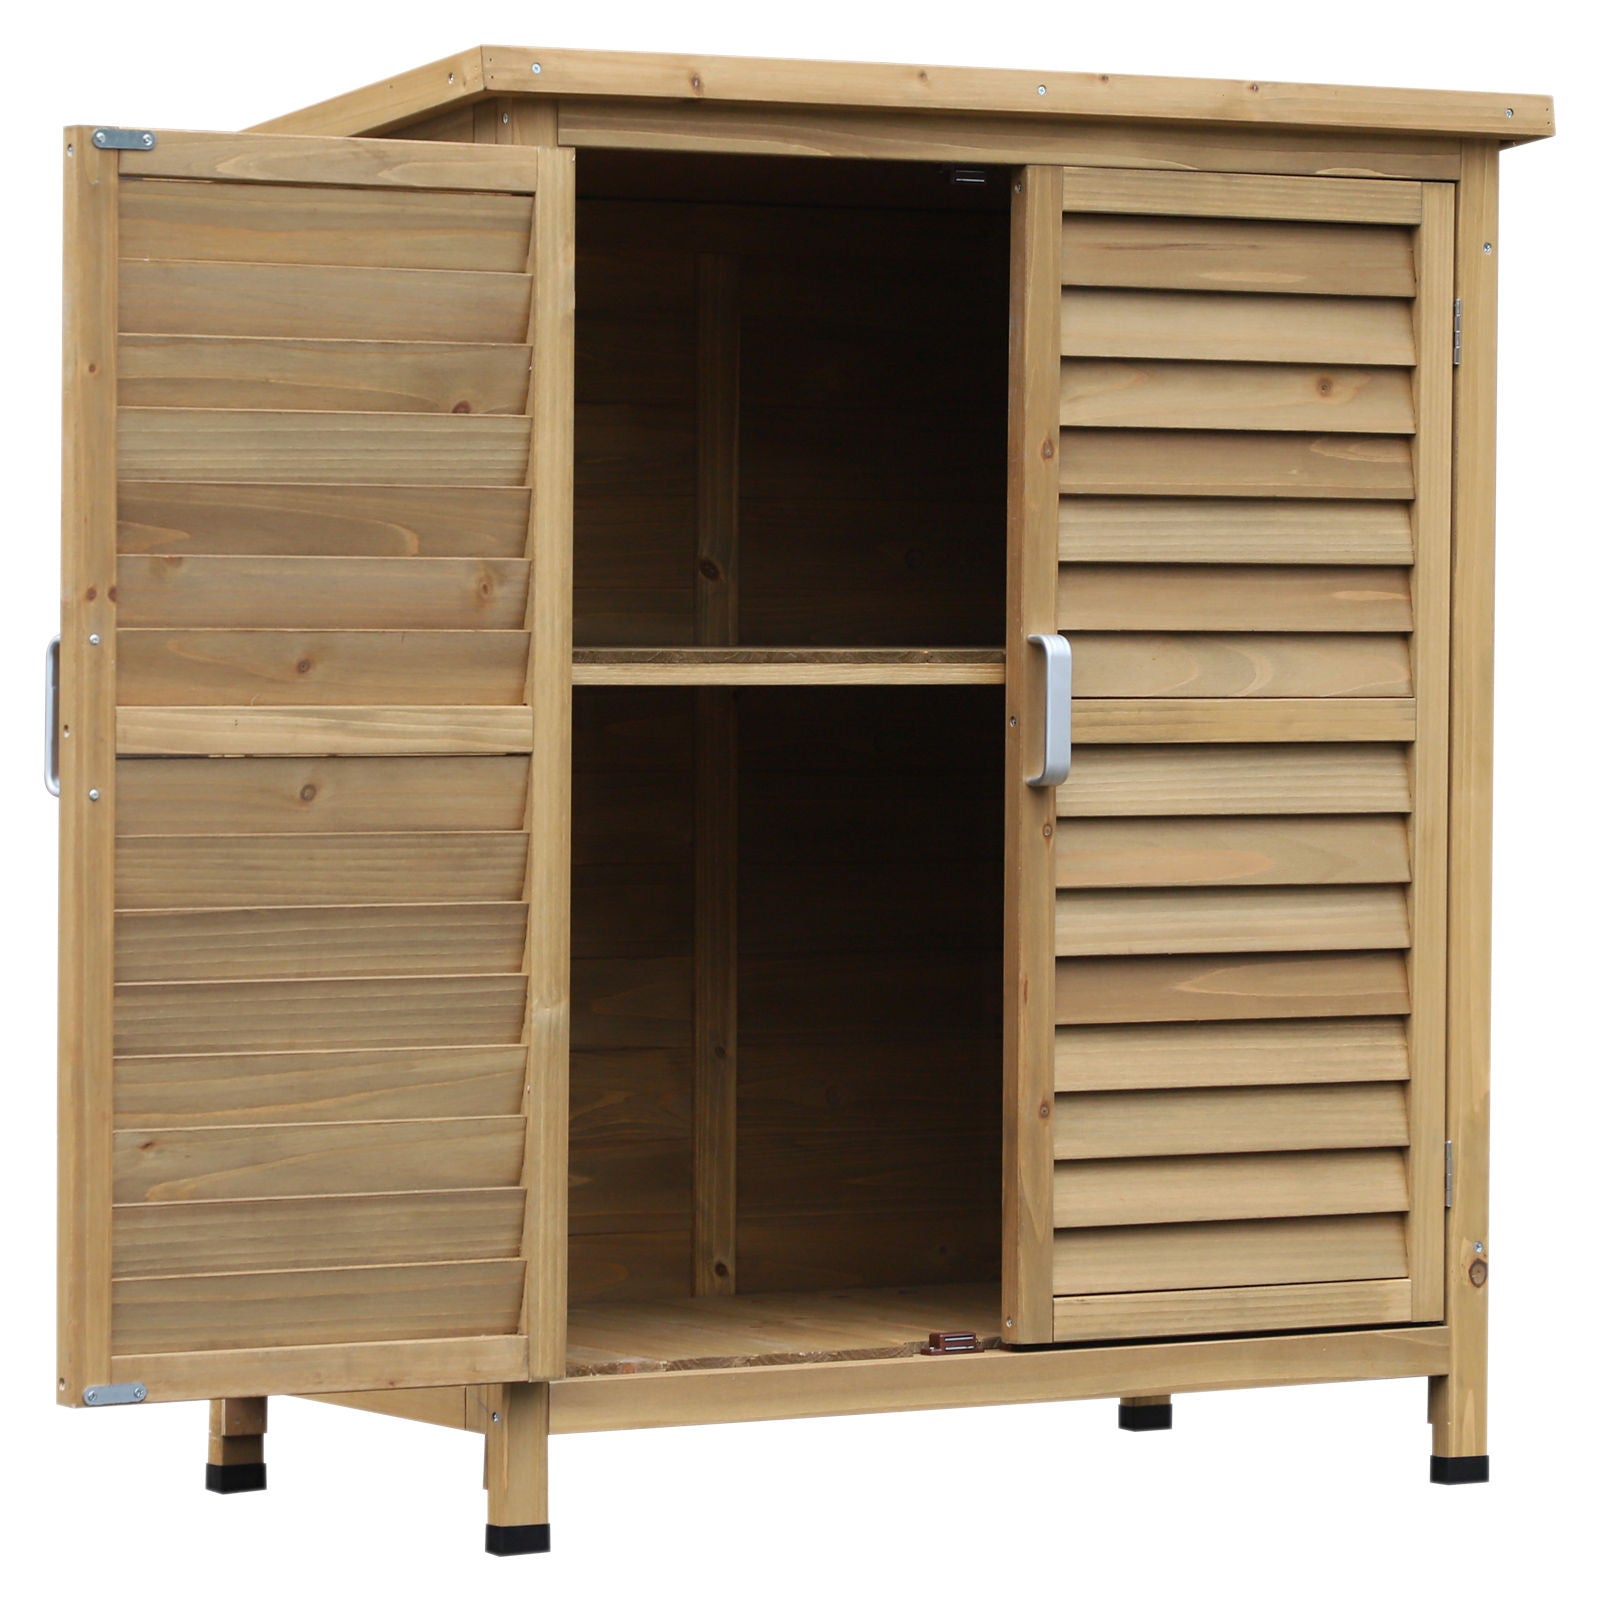 Nancy's Arran Lake Wooden Garden Cabinet - Brown - Firwood, Cardboard, Alluminum Alloy - 34.25 cm x 18.3 cm x 37.99 cm